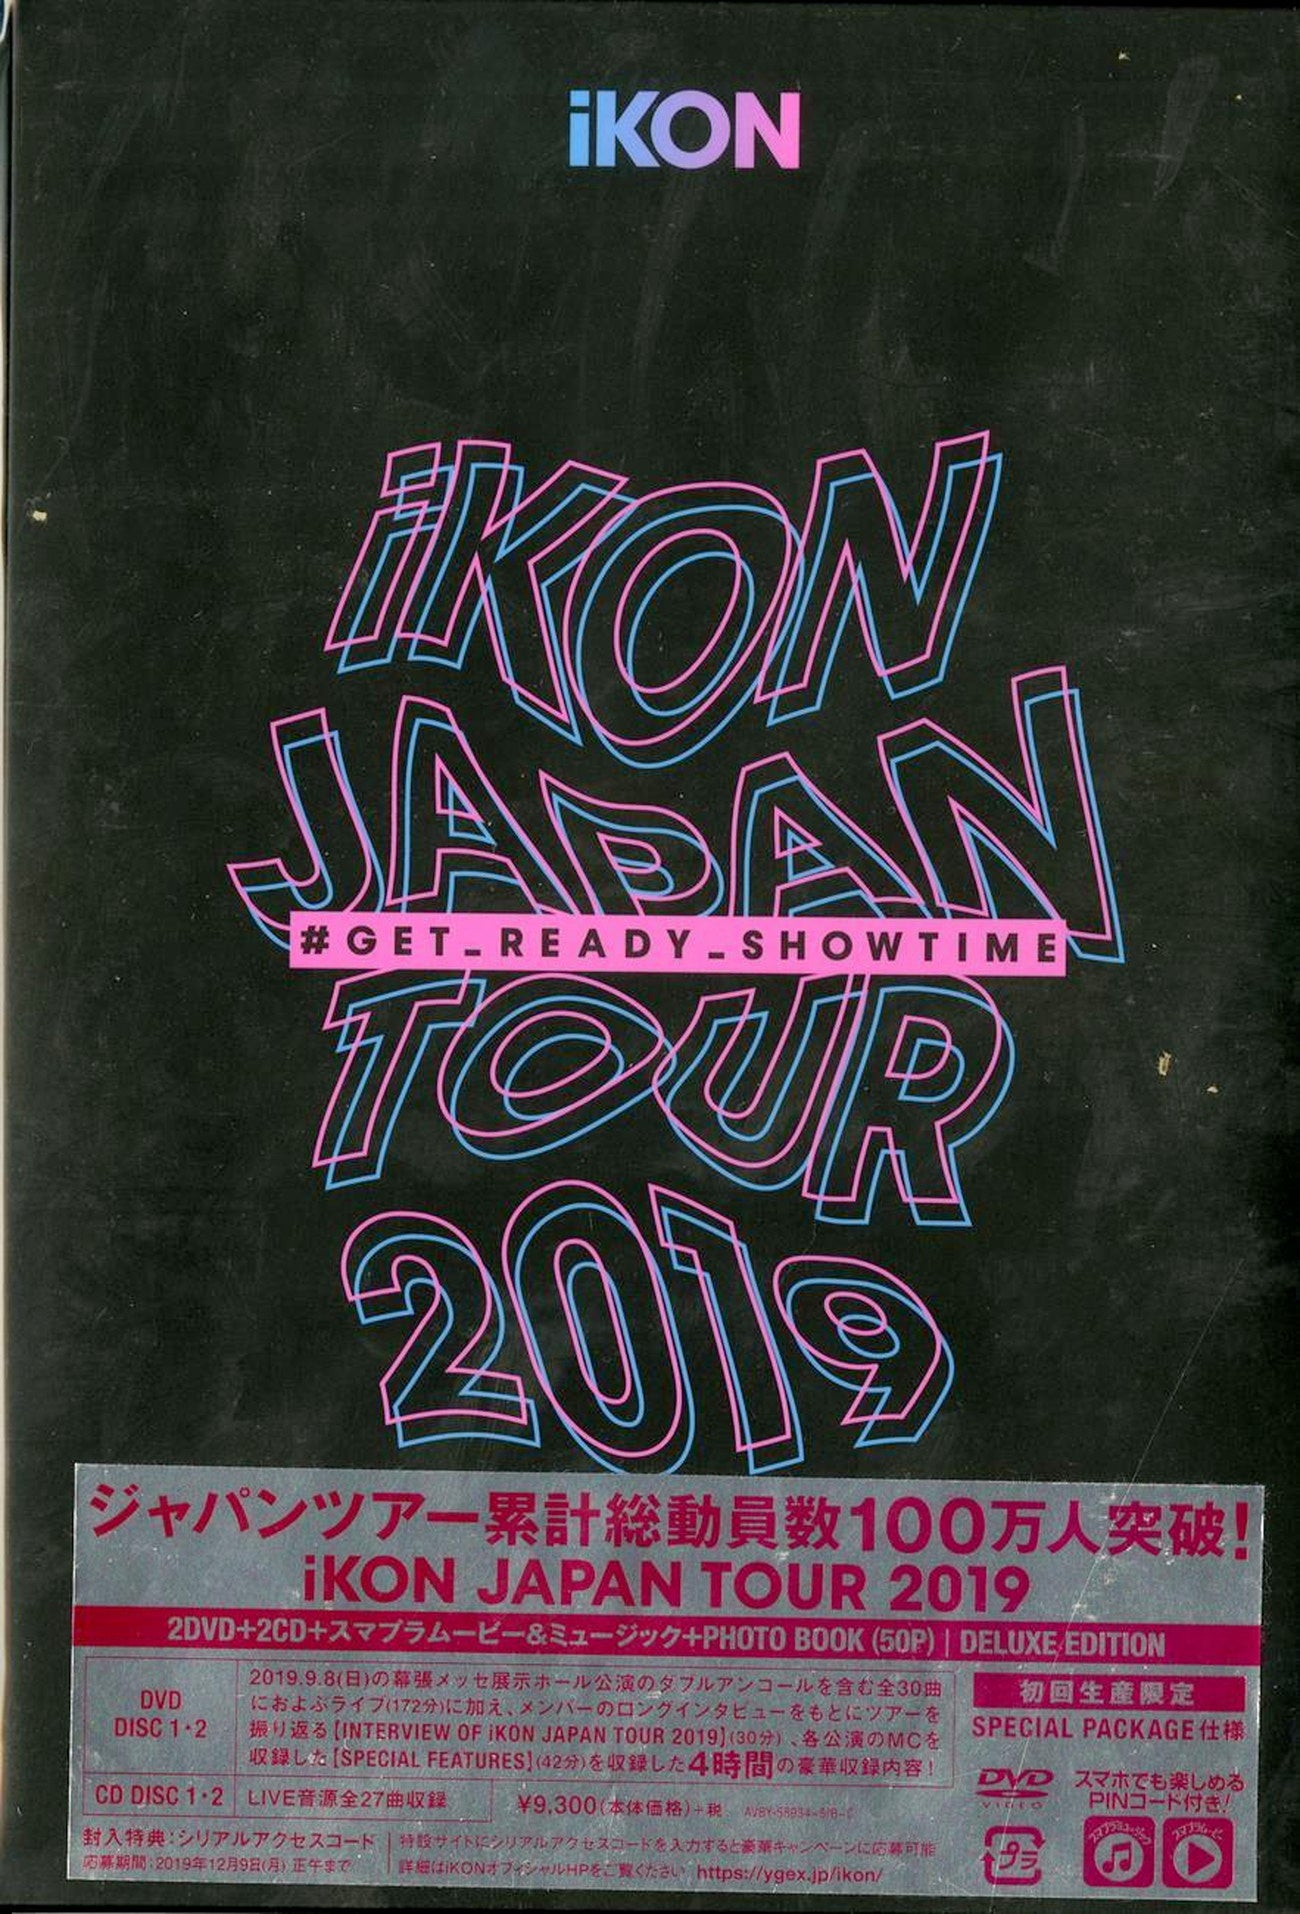 Ikon - Ikon Japan Tour 2019 - 2 DVD+2 CD+Book Limited Edition